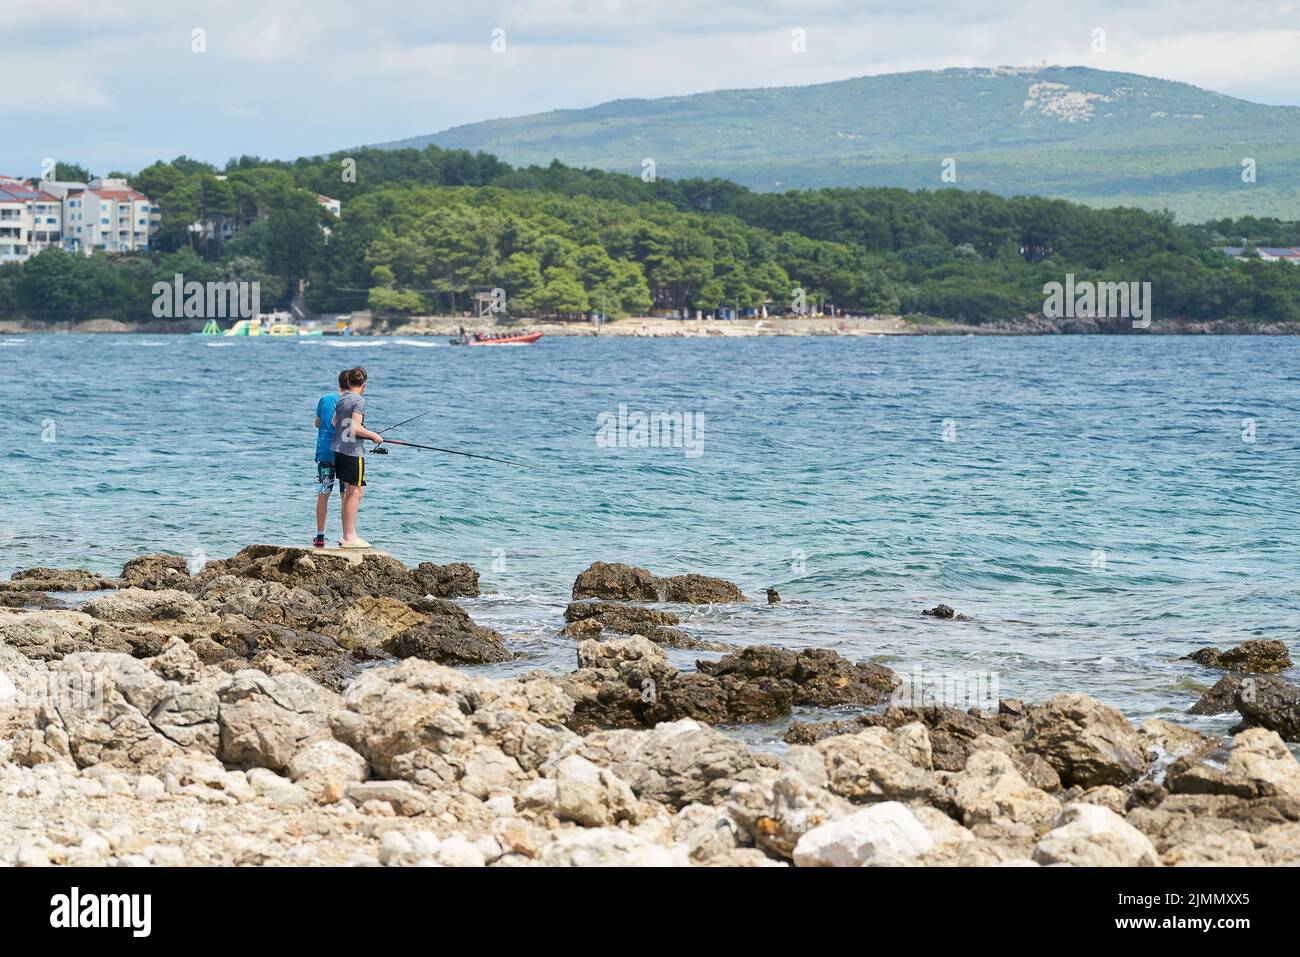 Two children standing on rocky coast near town Krk in Croatia fishing Stock Photo